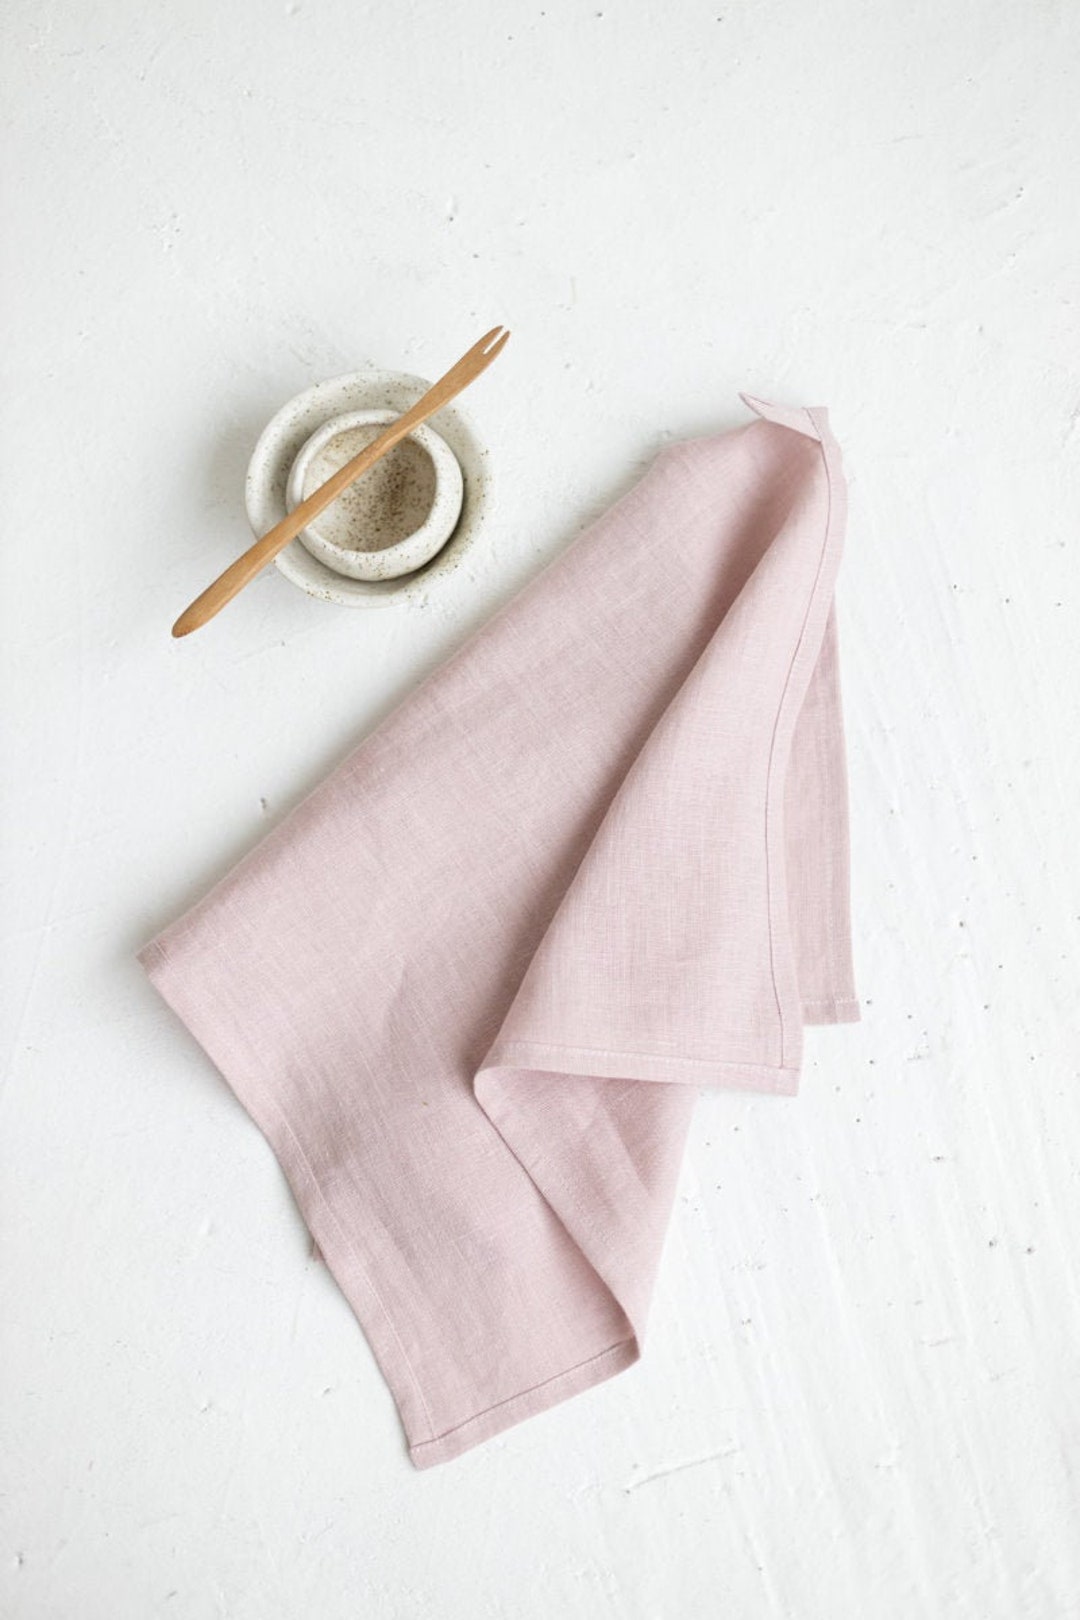 Stonewashed linen - pure 100% flax linen kitchen tea towel hand